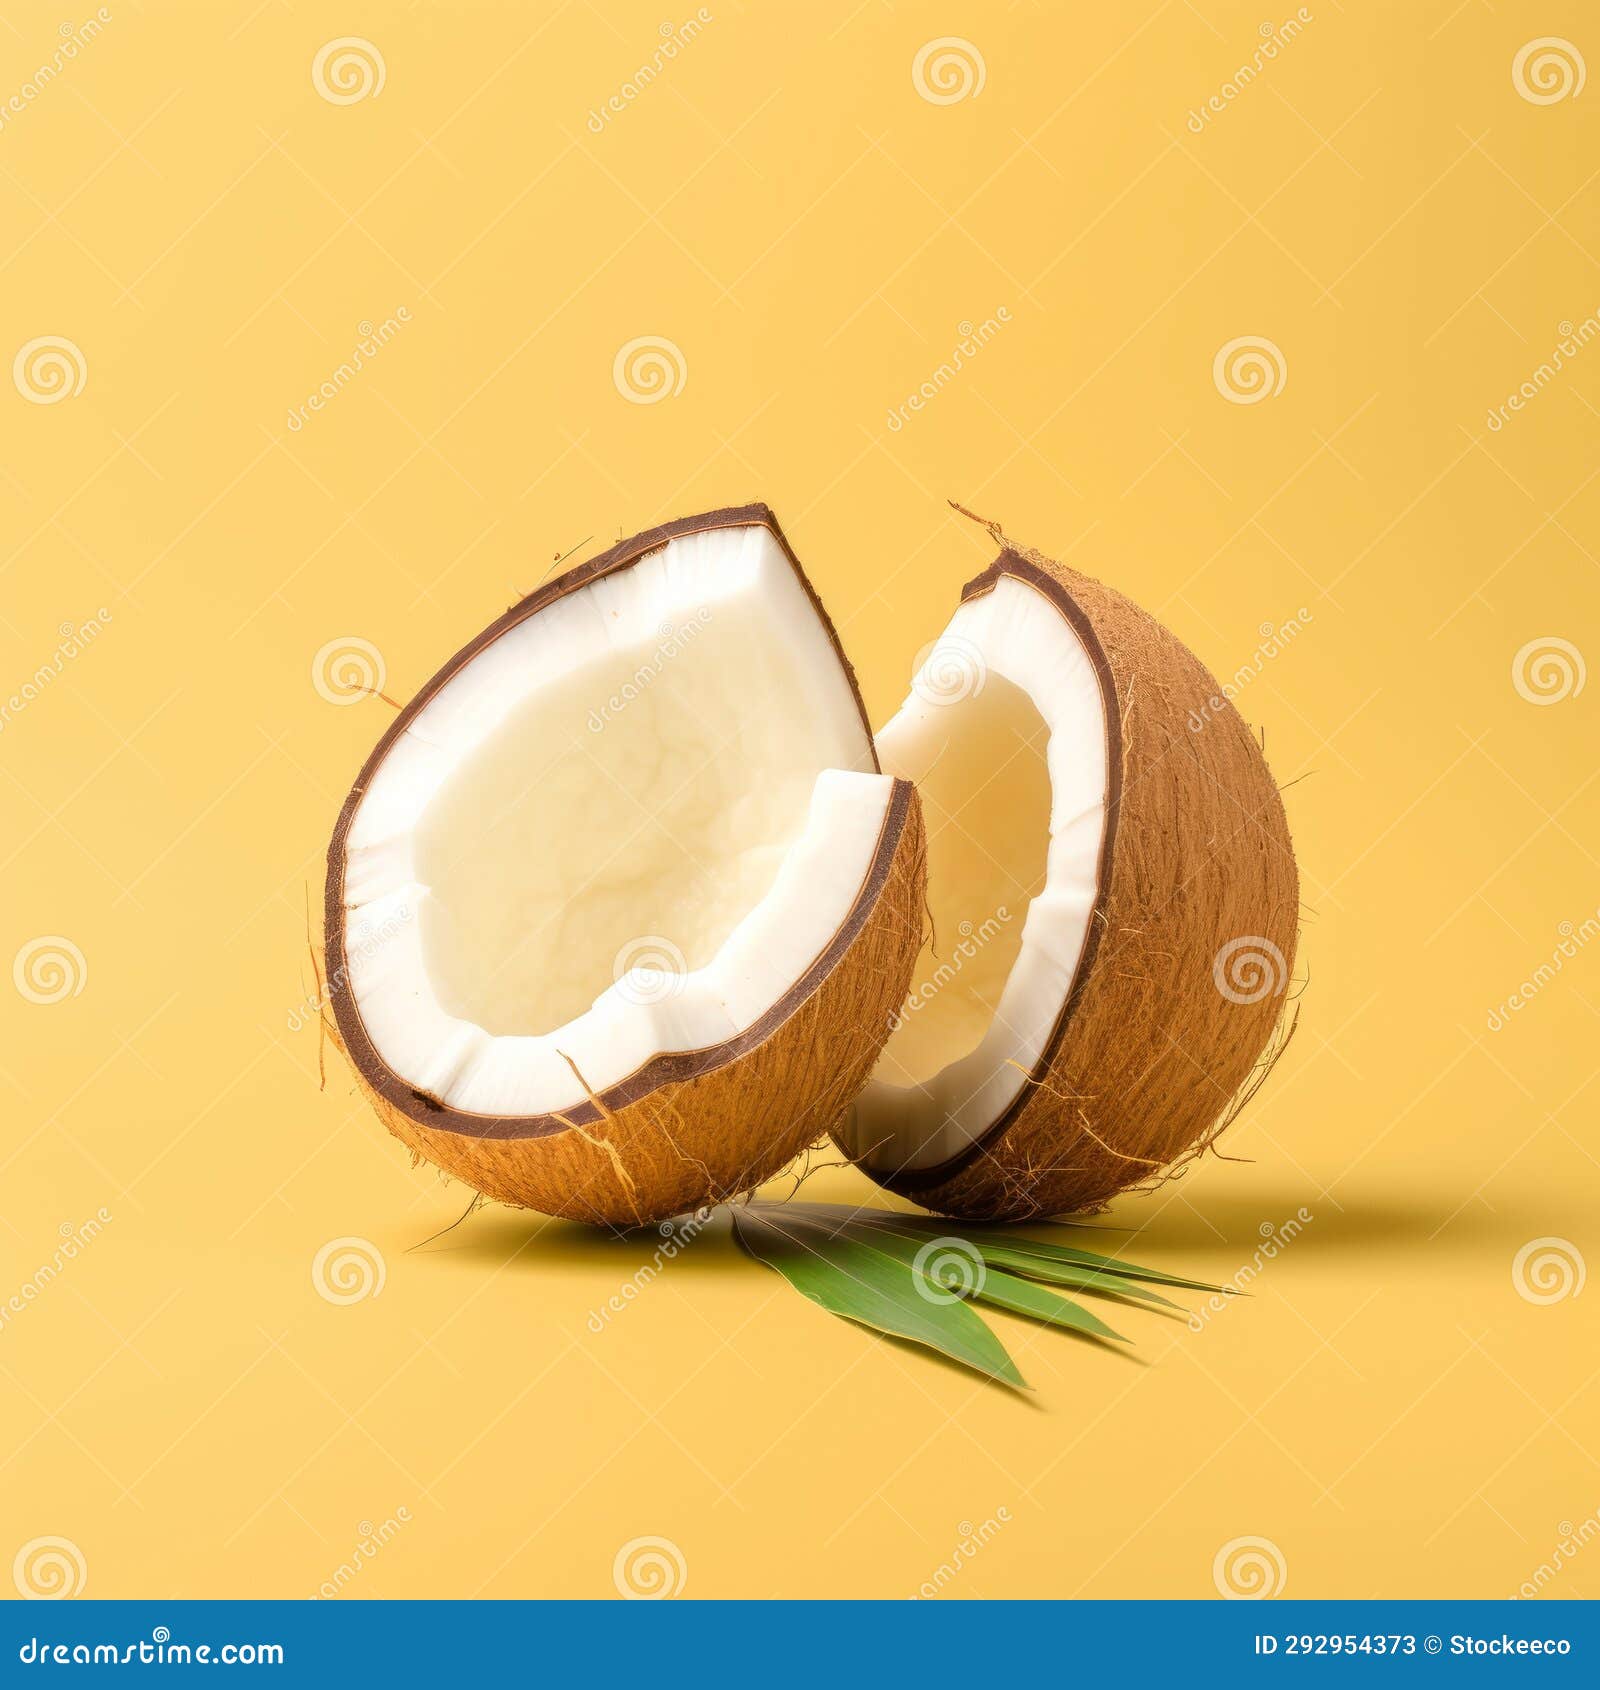 minimalistic coconut  on light yellow background